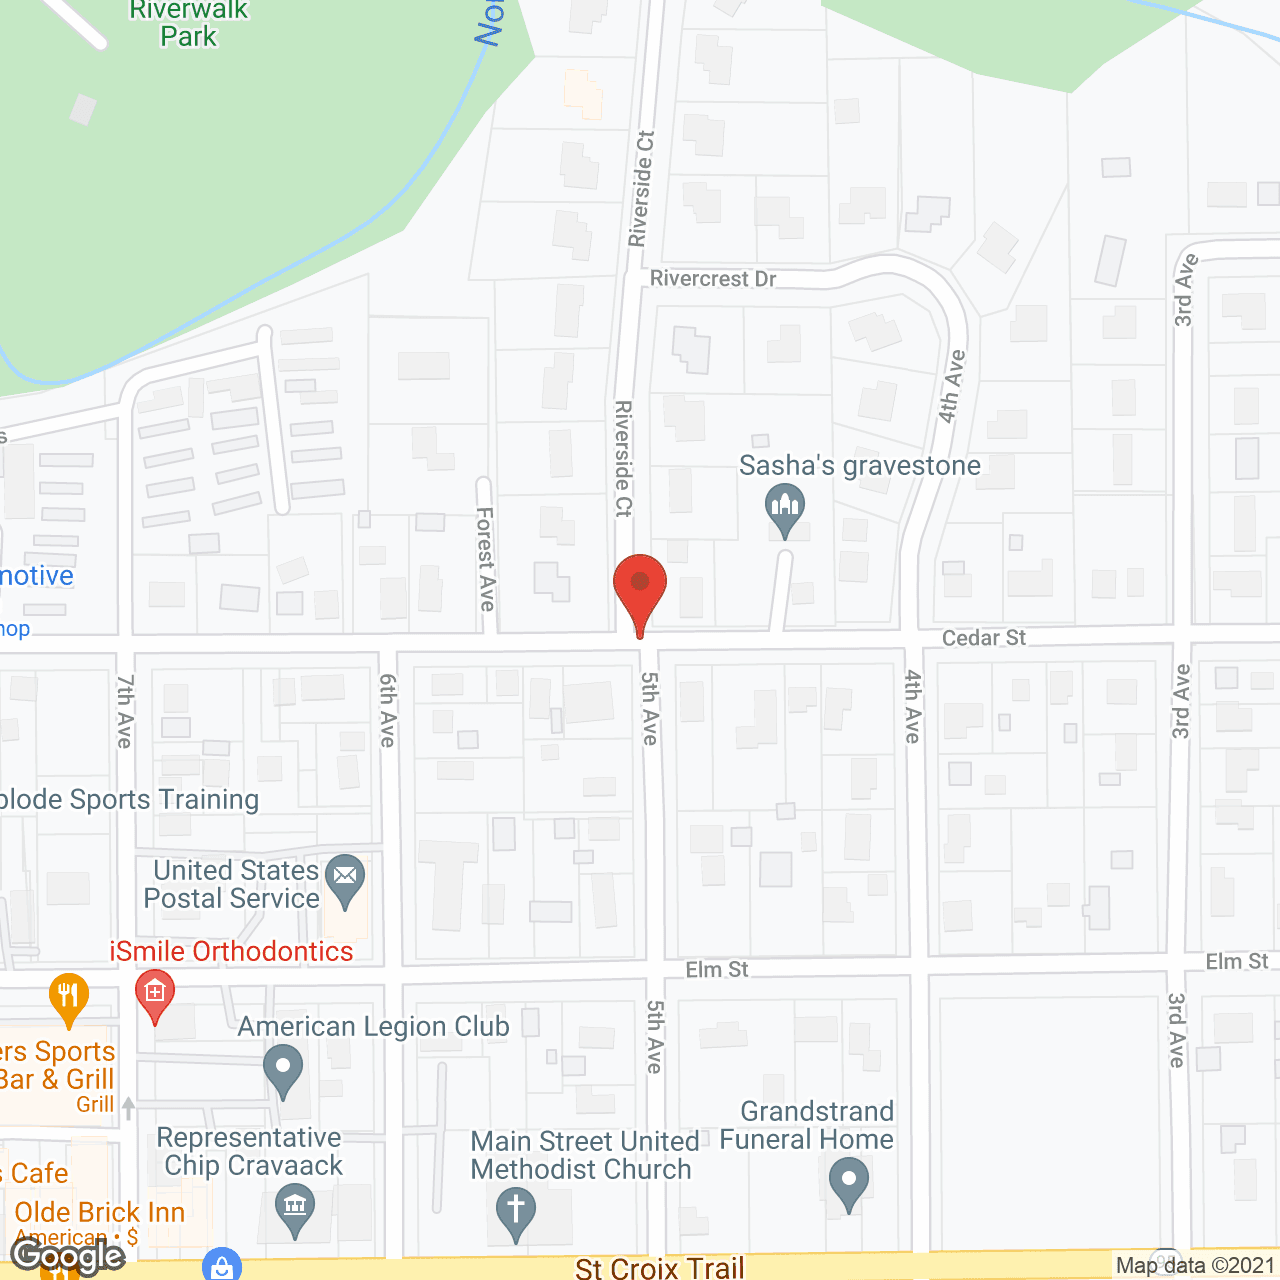 Shields Plaza in google map